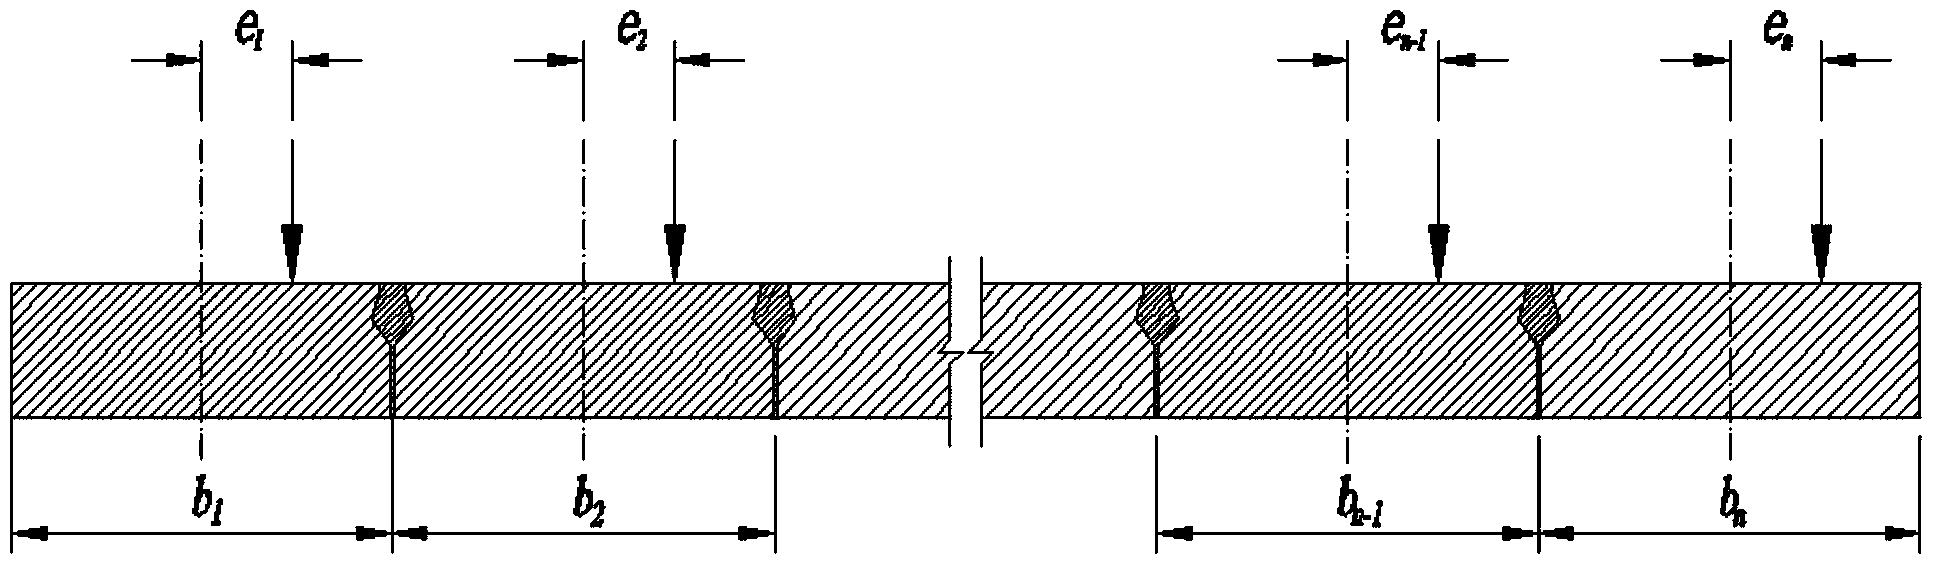 Inversion method of dynamic bearing capacity of plate girder bridge structure